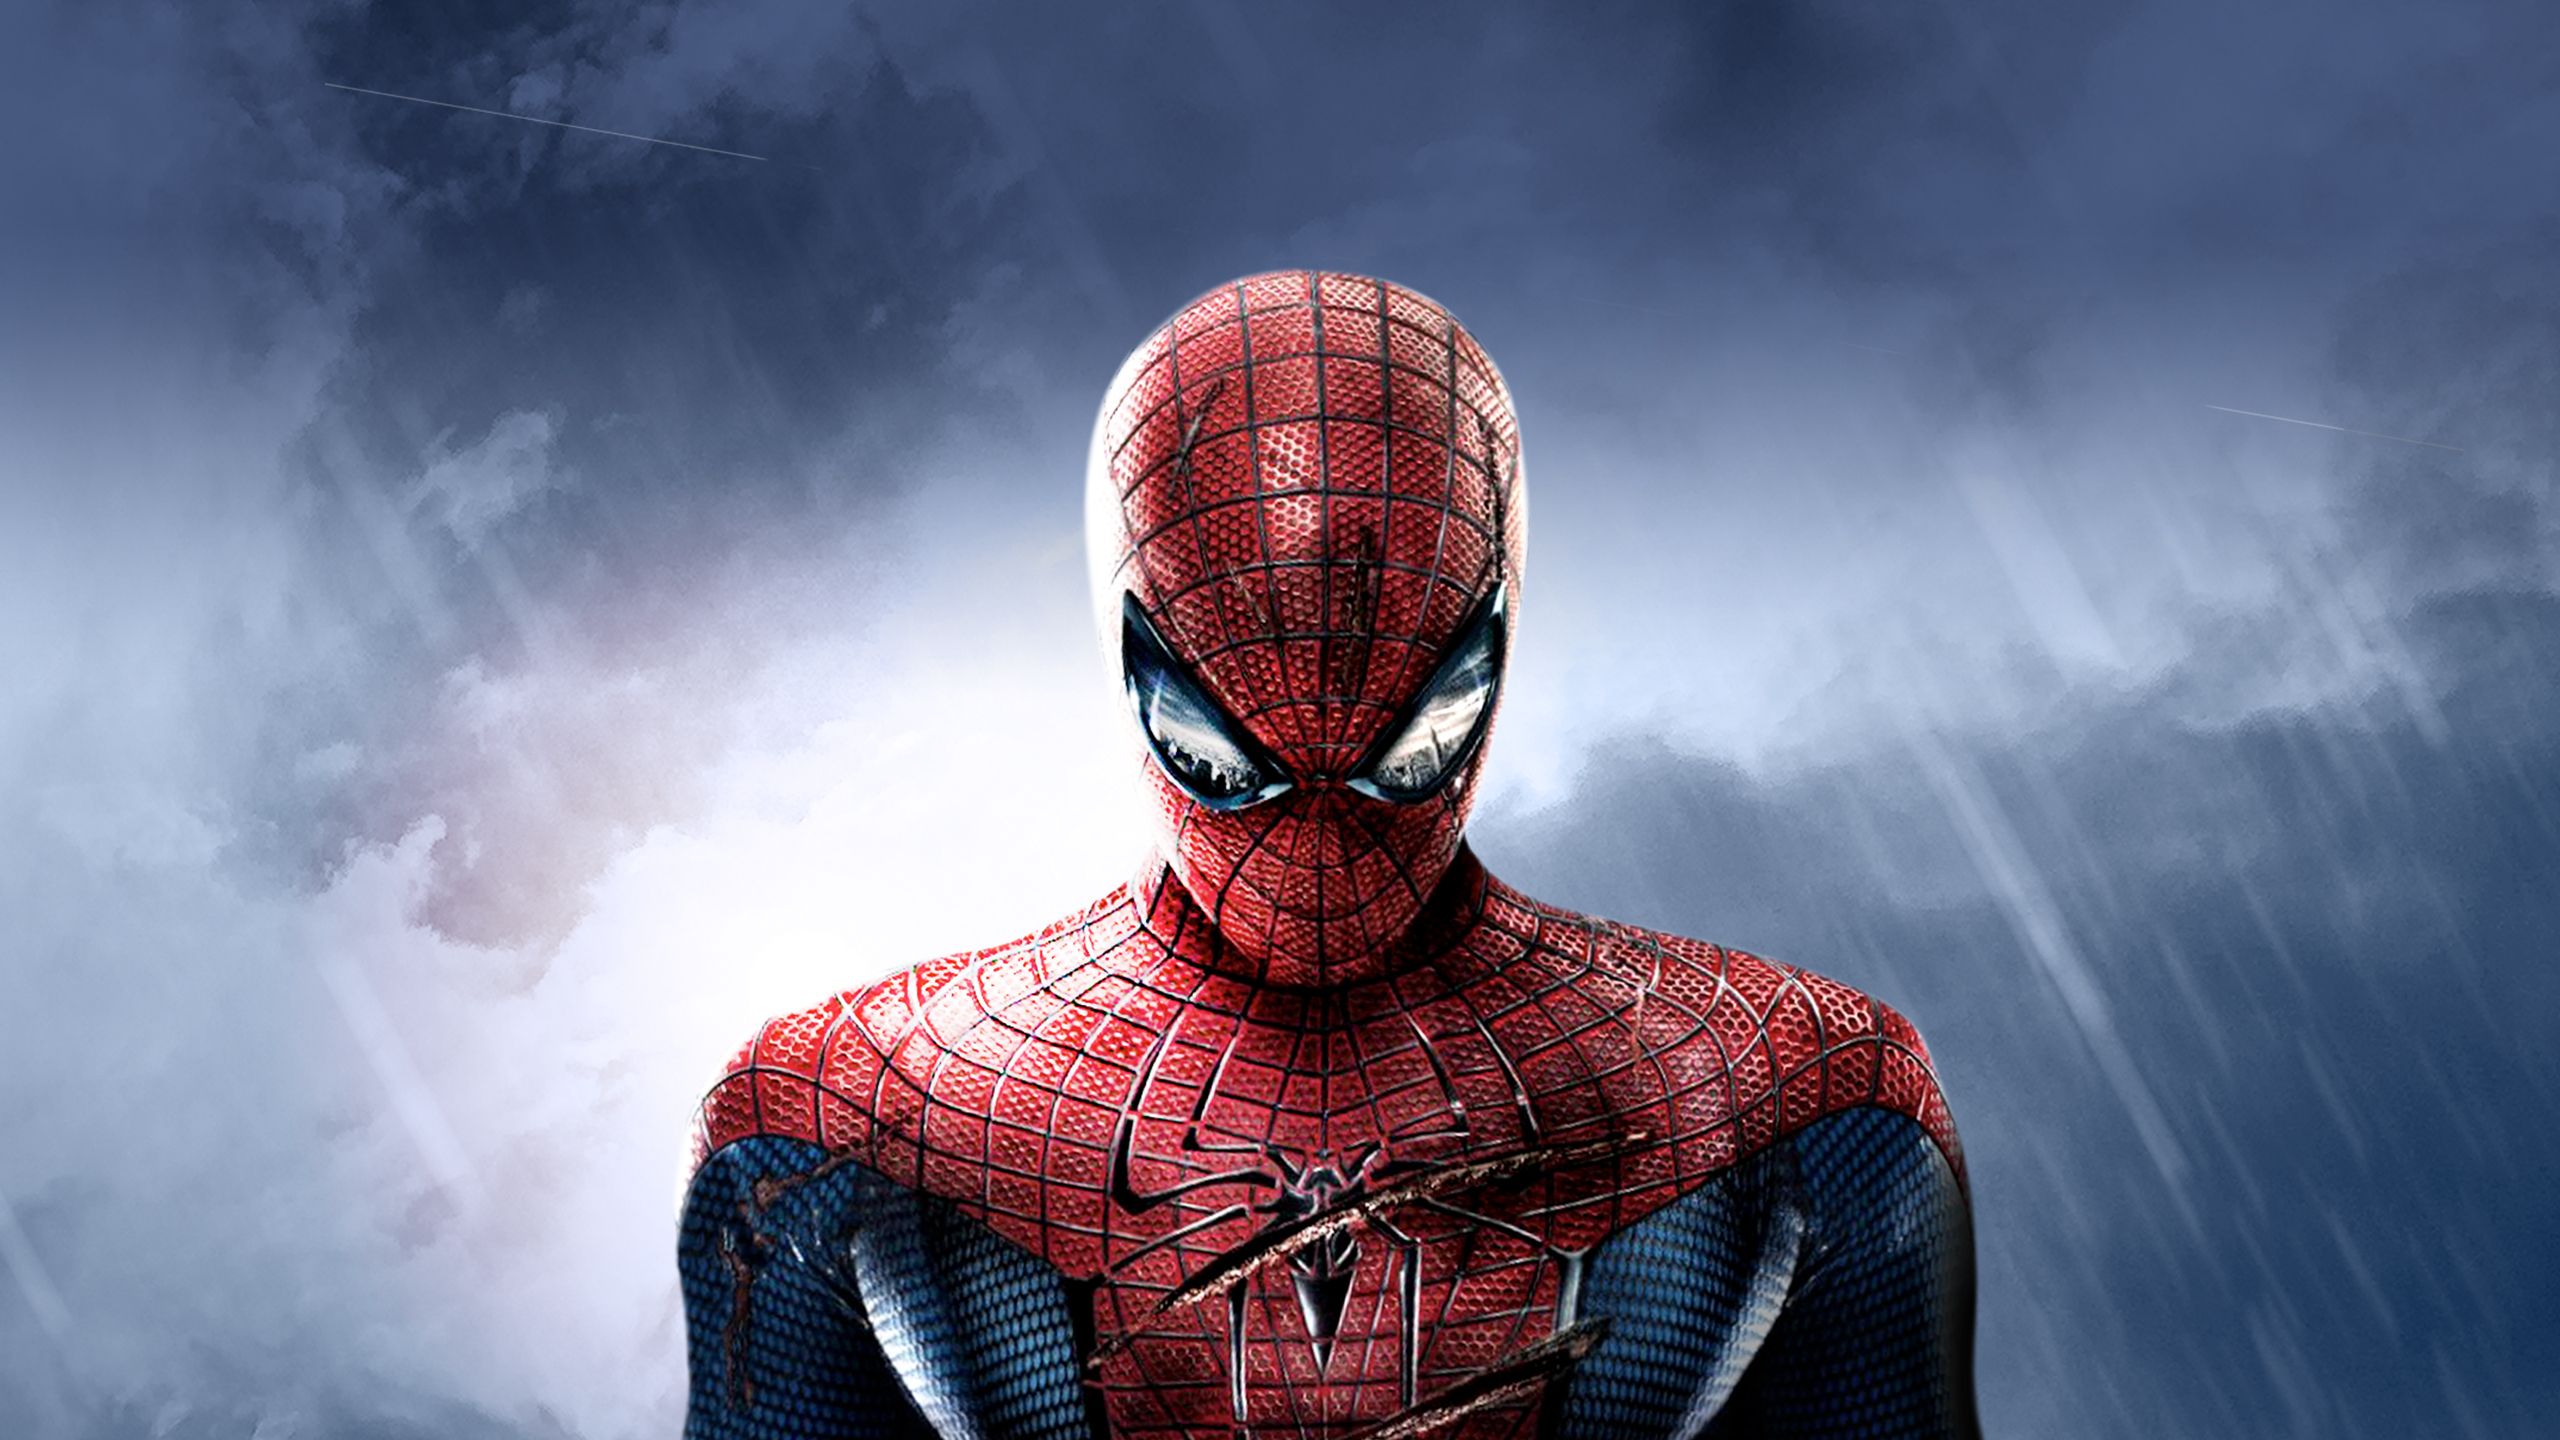 The Amazing Spider-Man, Full Movie